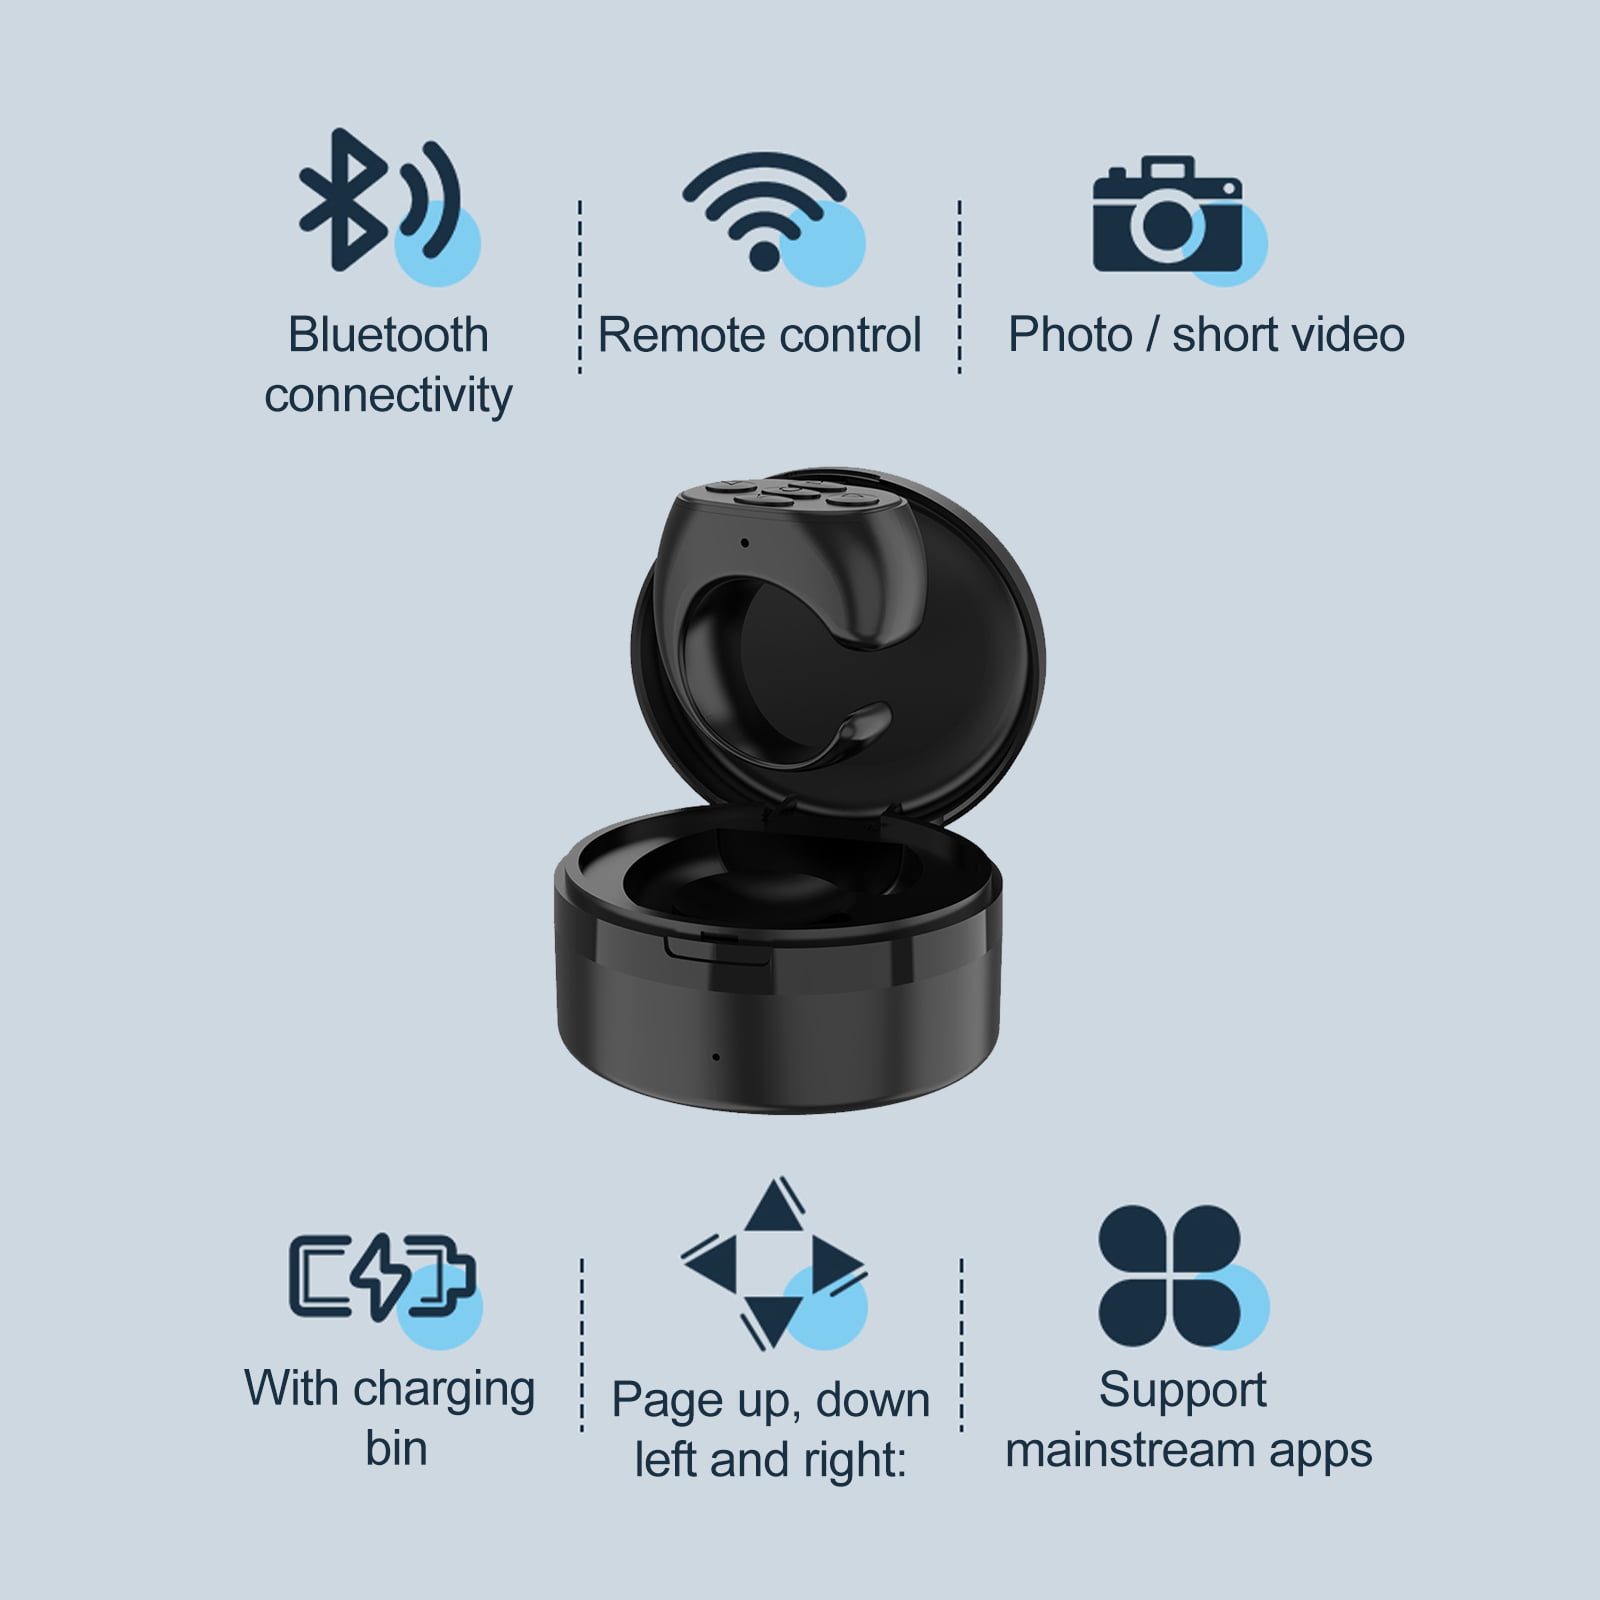  Vekesen TikTok Scrolling Ring TIK Tok Bluetooth Ring Remote  Page Turner clicker for iPhone iPad Camera Wireless Remote Shutter Selfie  Button (D01, Black) : Electronics